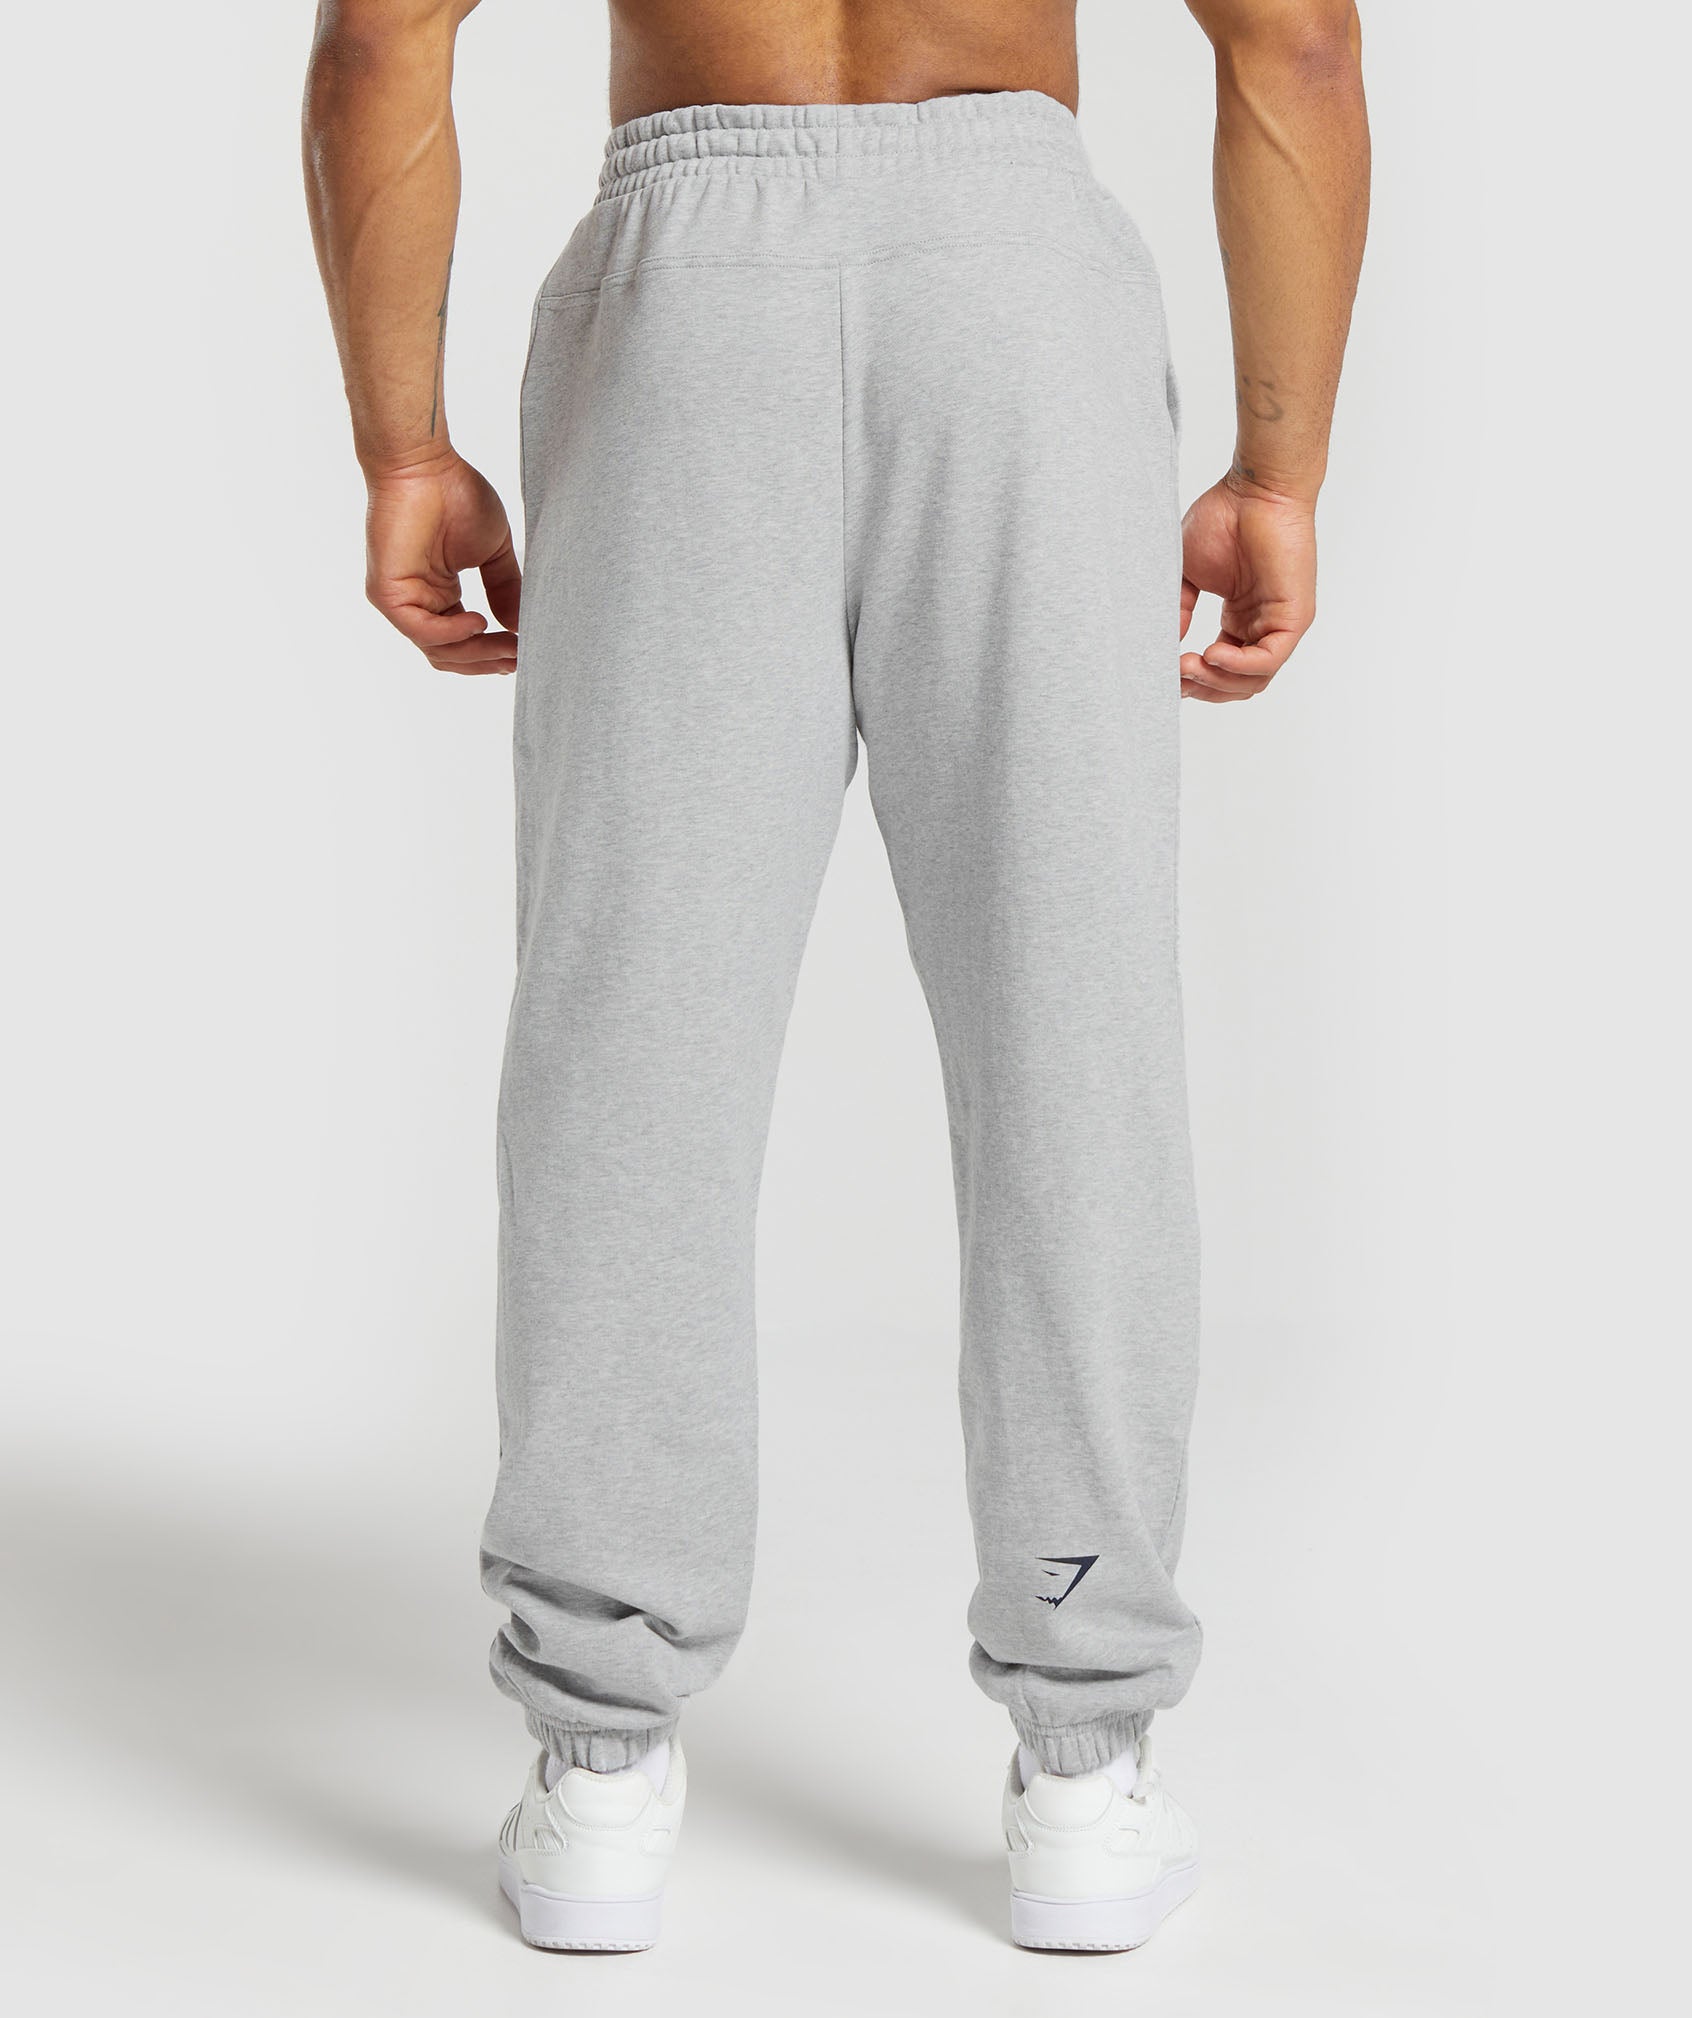 Eco friendly Sportswear Longpants Light Grey - Blush Collection – Fitico  Sportswear